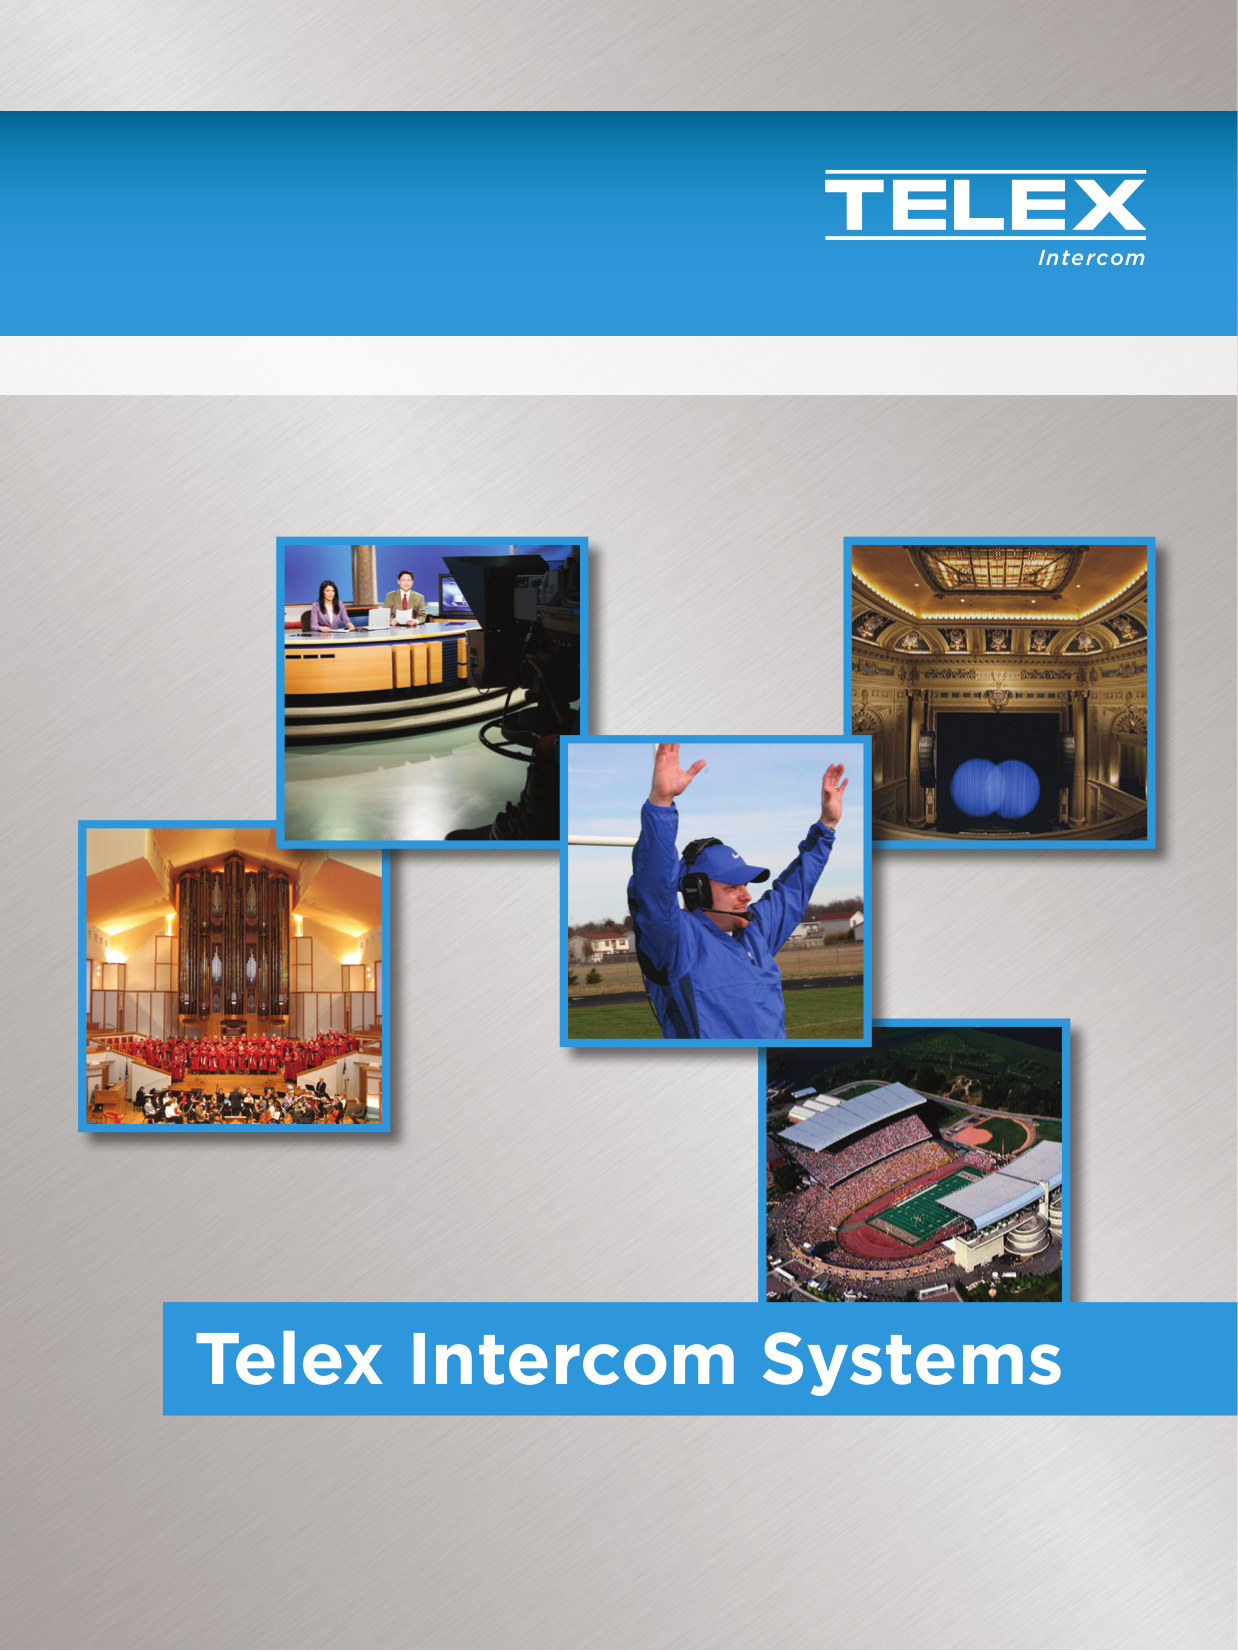 pdf for Telex Other TR-800 Intercom System manual